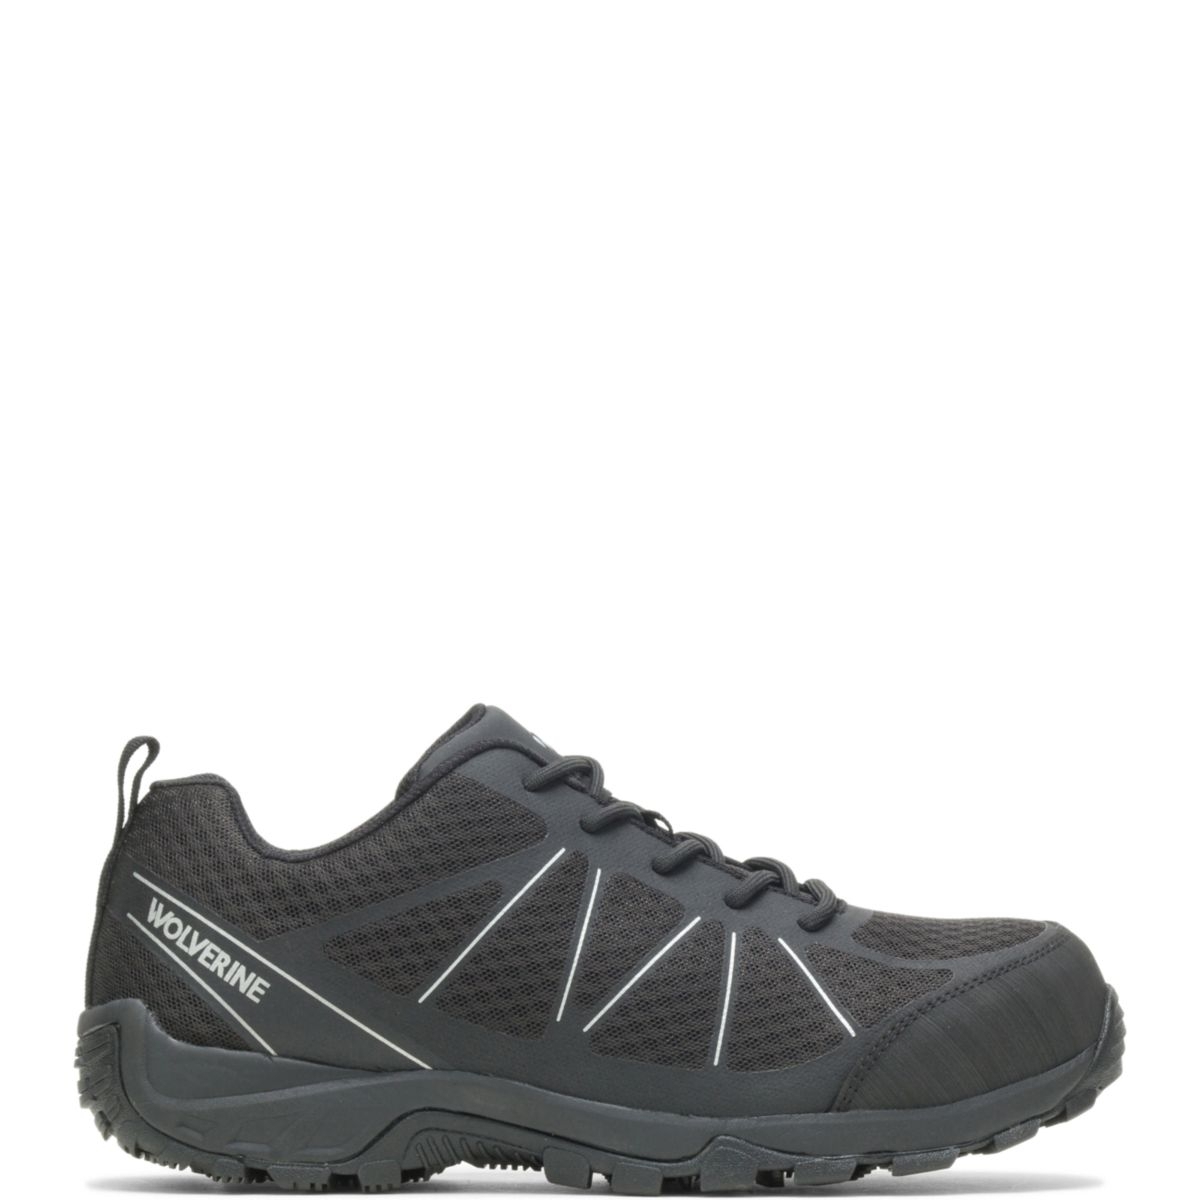 WOLVERINE Men's Amherst II CarbonMAXÂ® Composite Toe Work Shoe Black - W201147 BLACK - BLACK, 11